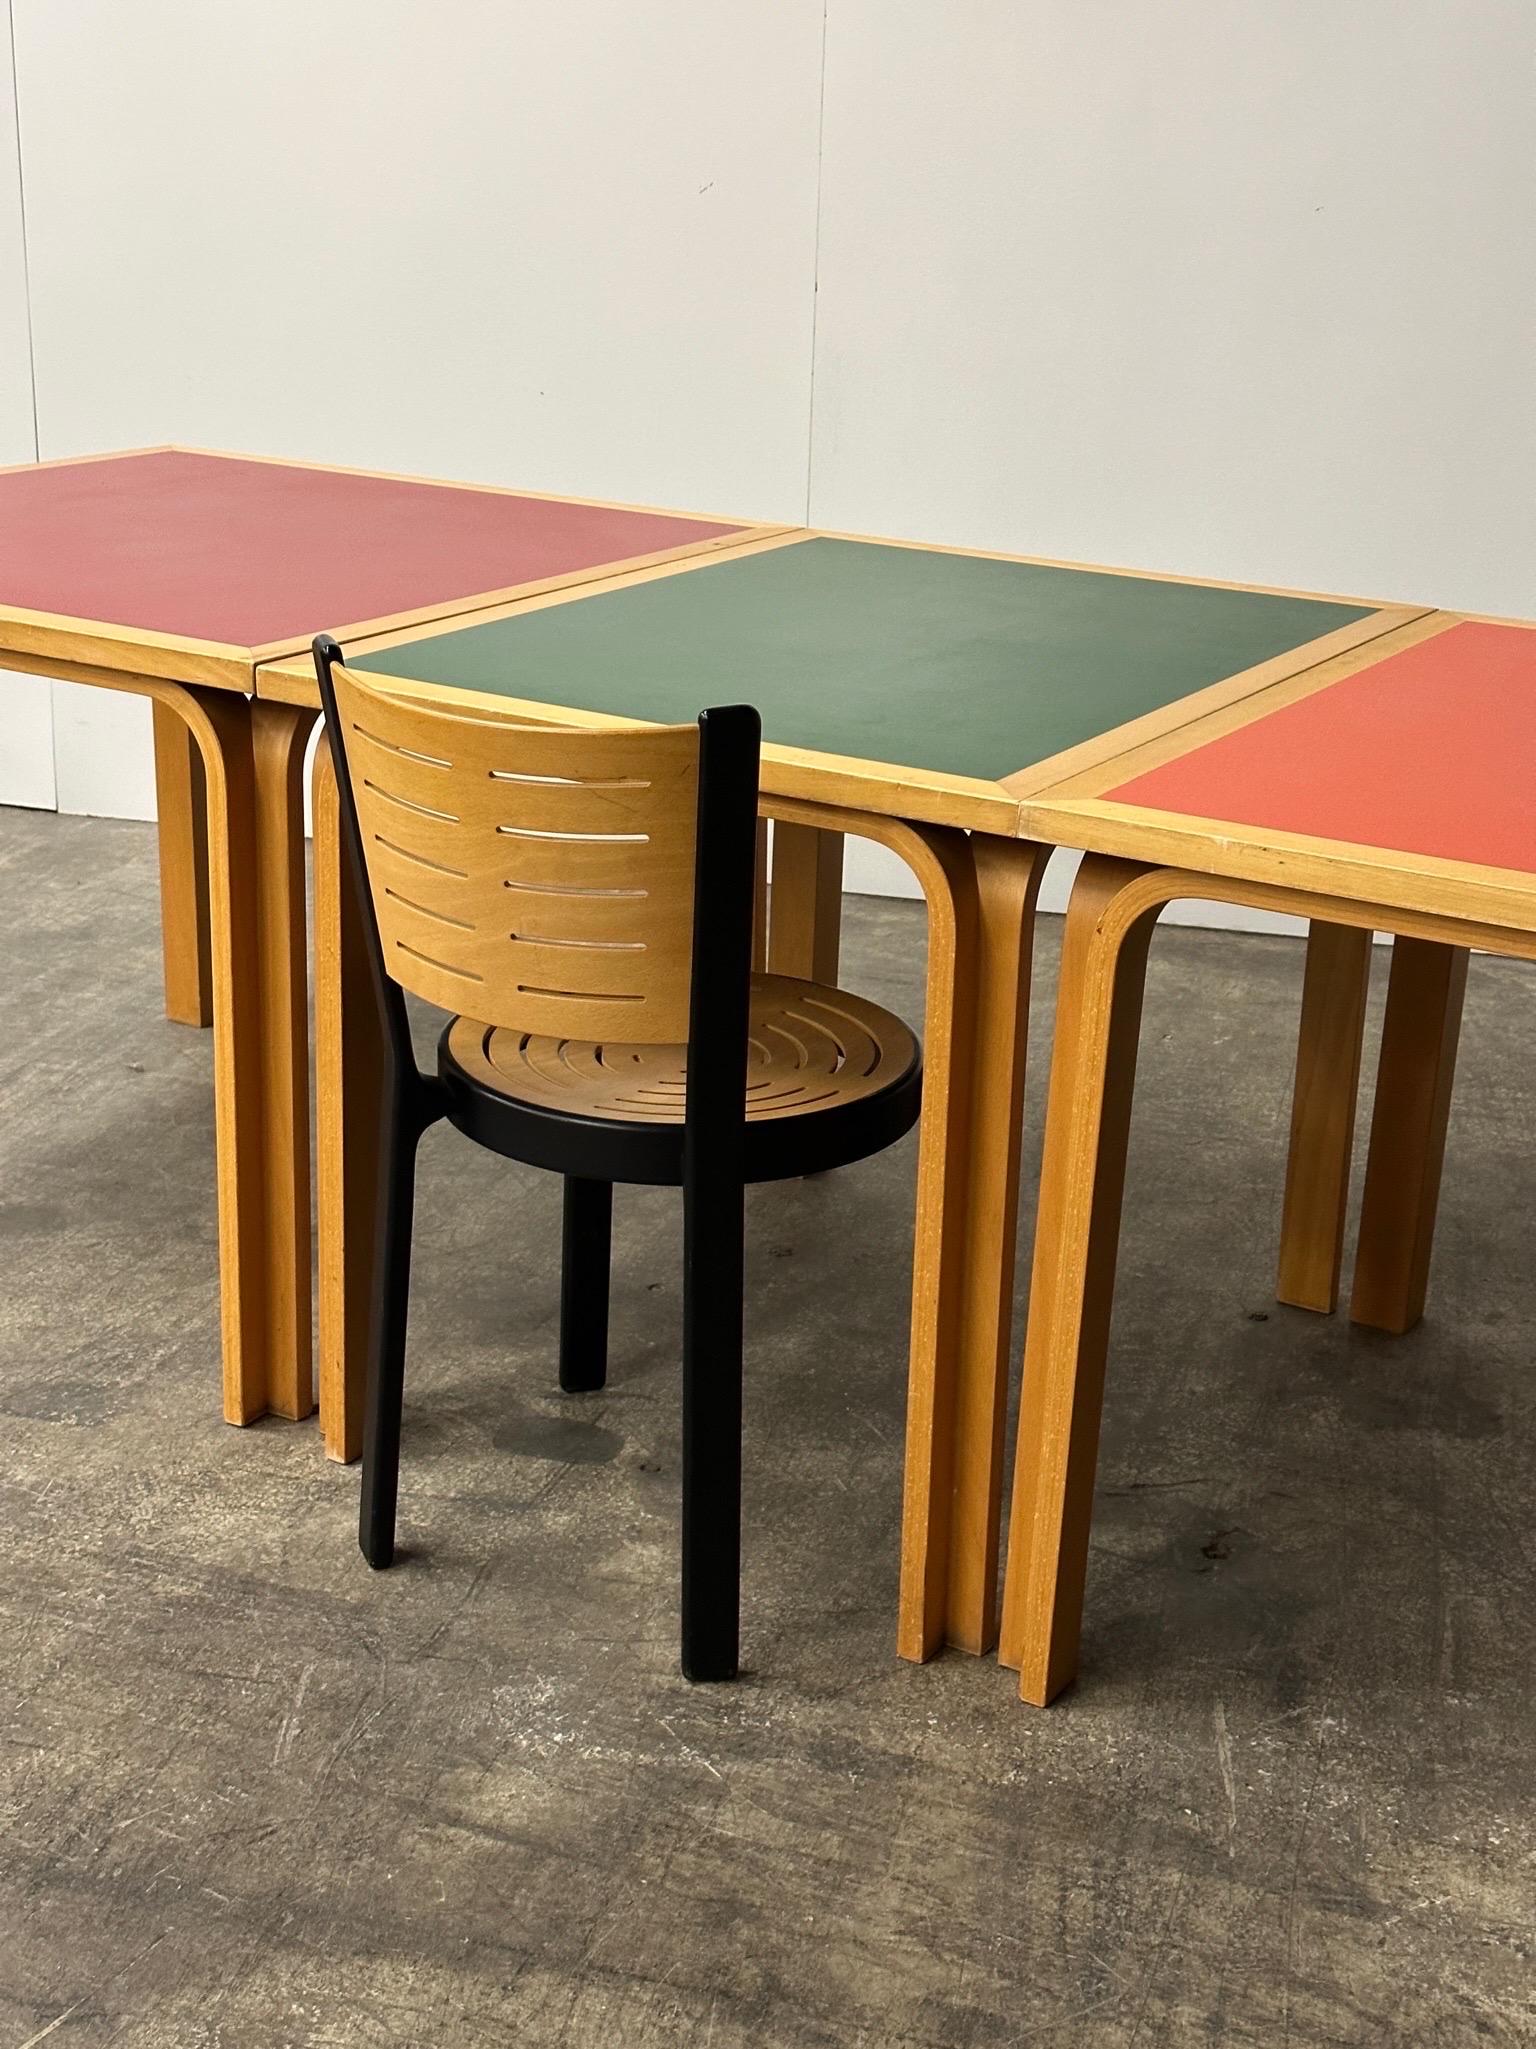 Birch Square Red Table by Rud Thygesen and Johnny Sørensen for Magnus Olesen